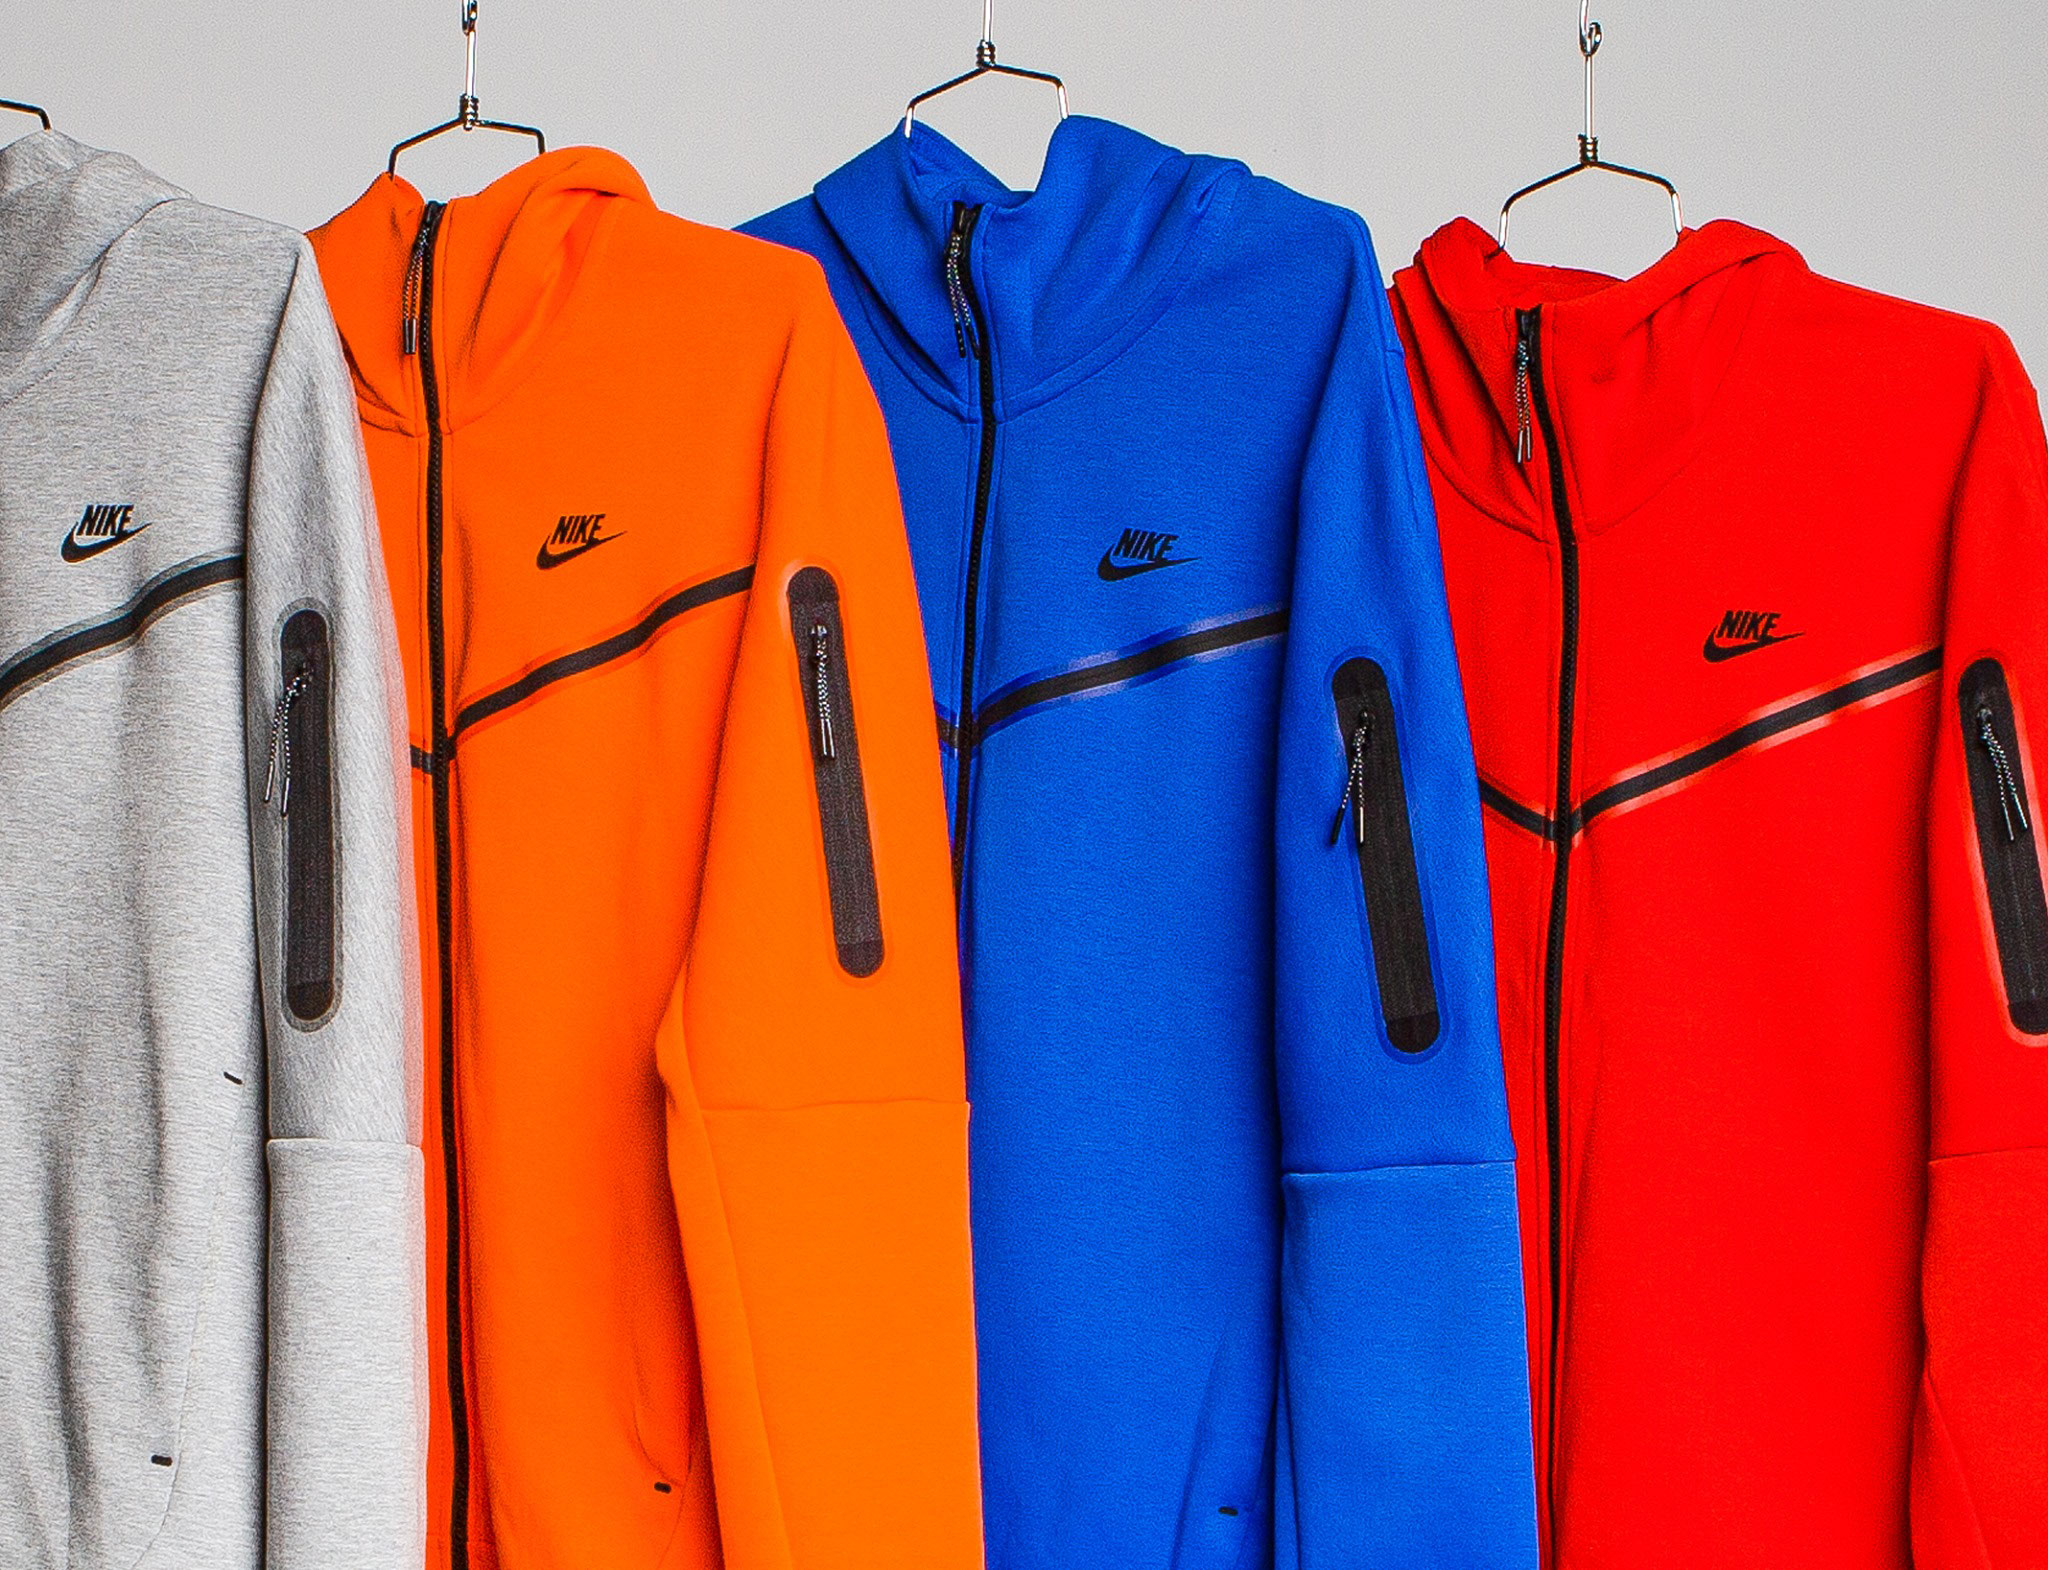 Nike Tech Fleece Hoodies Fall 2020 